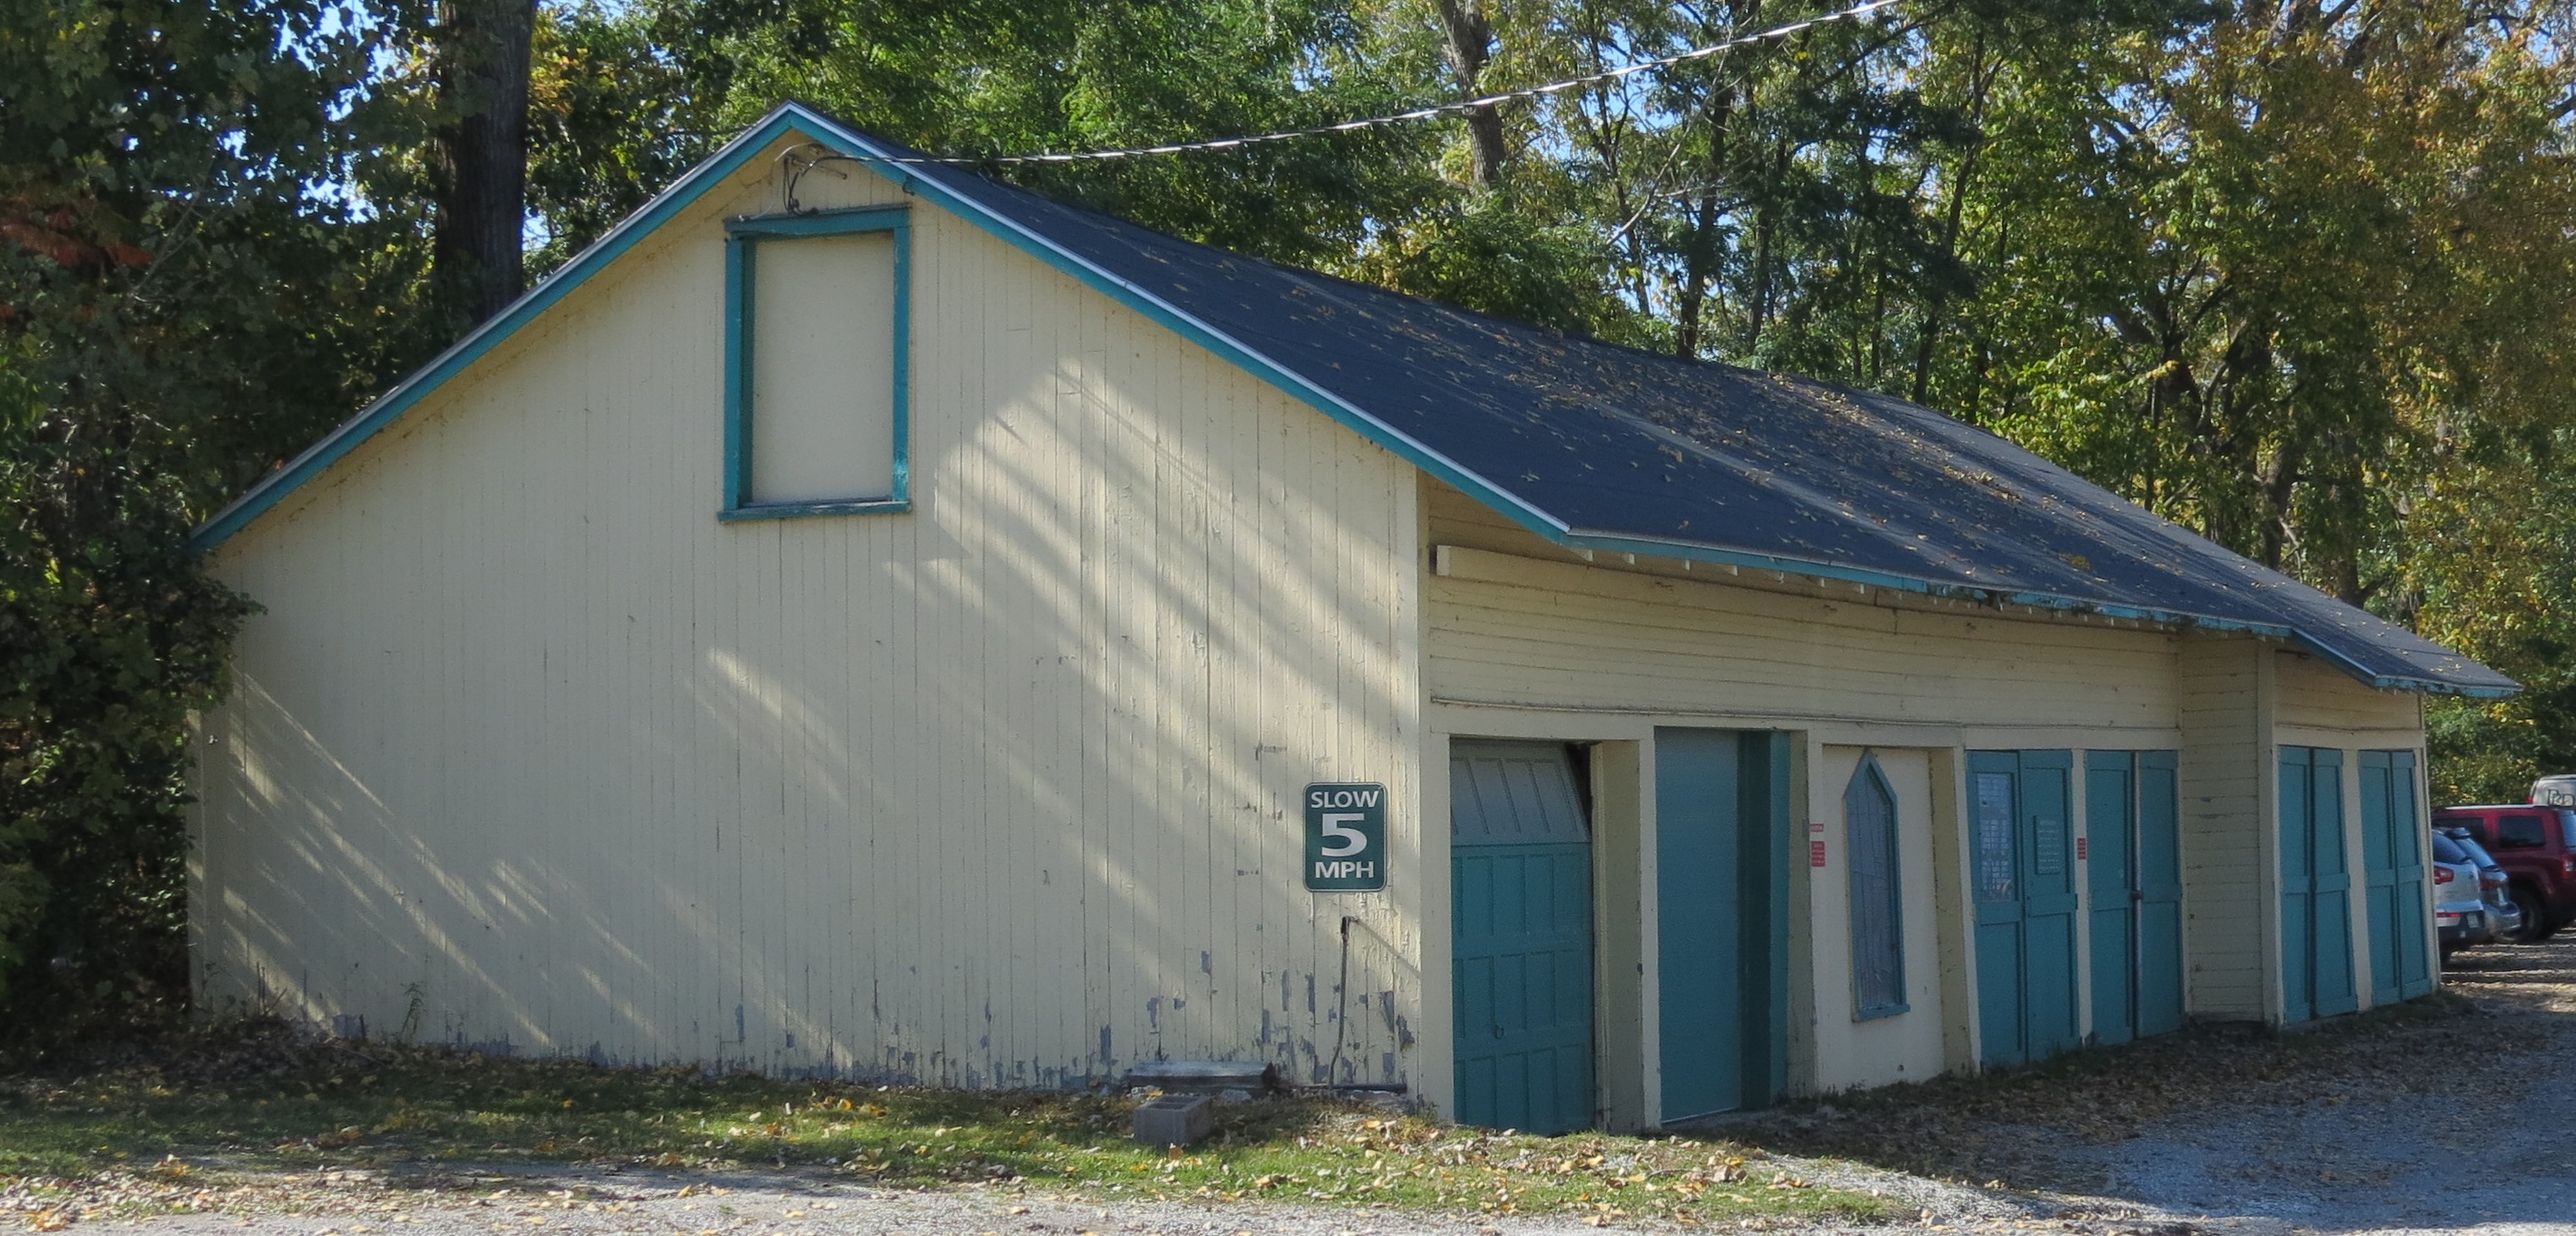 Citizens Coal Company wagon shed, 2013